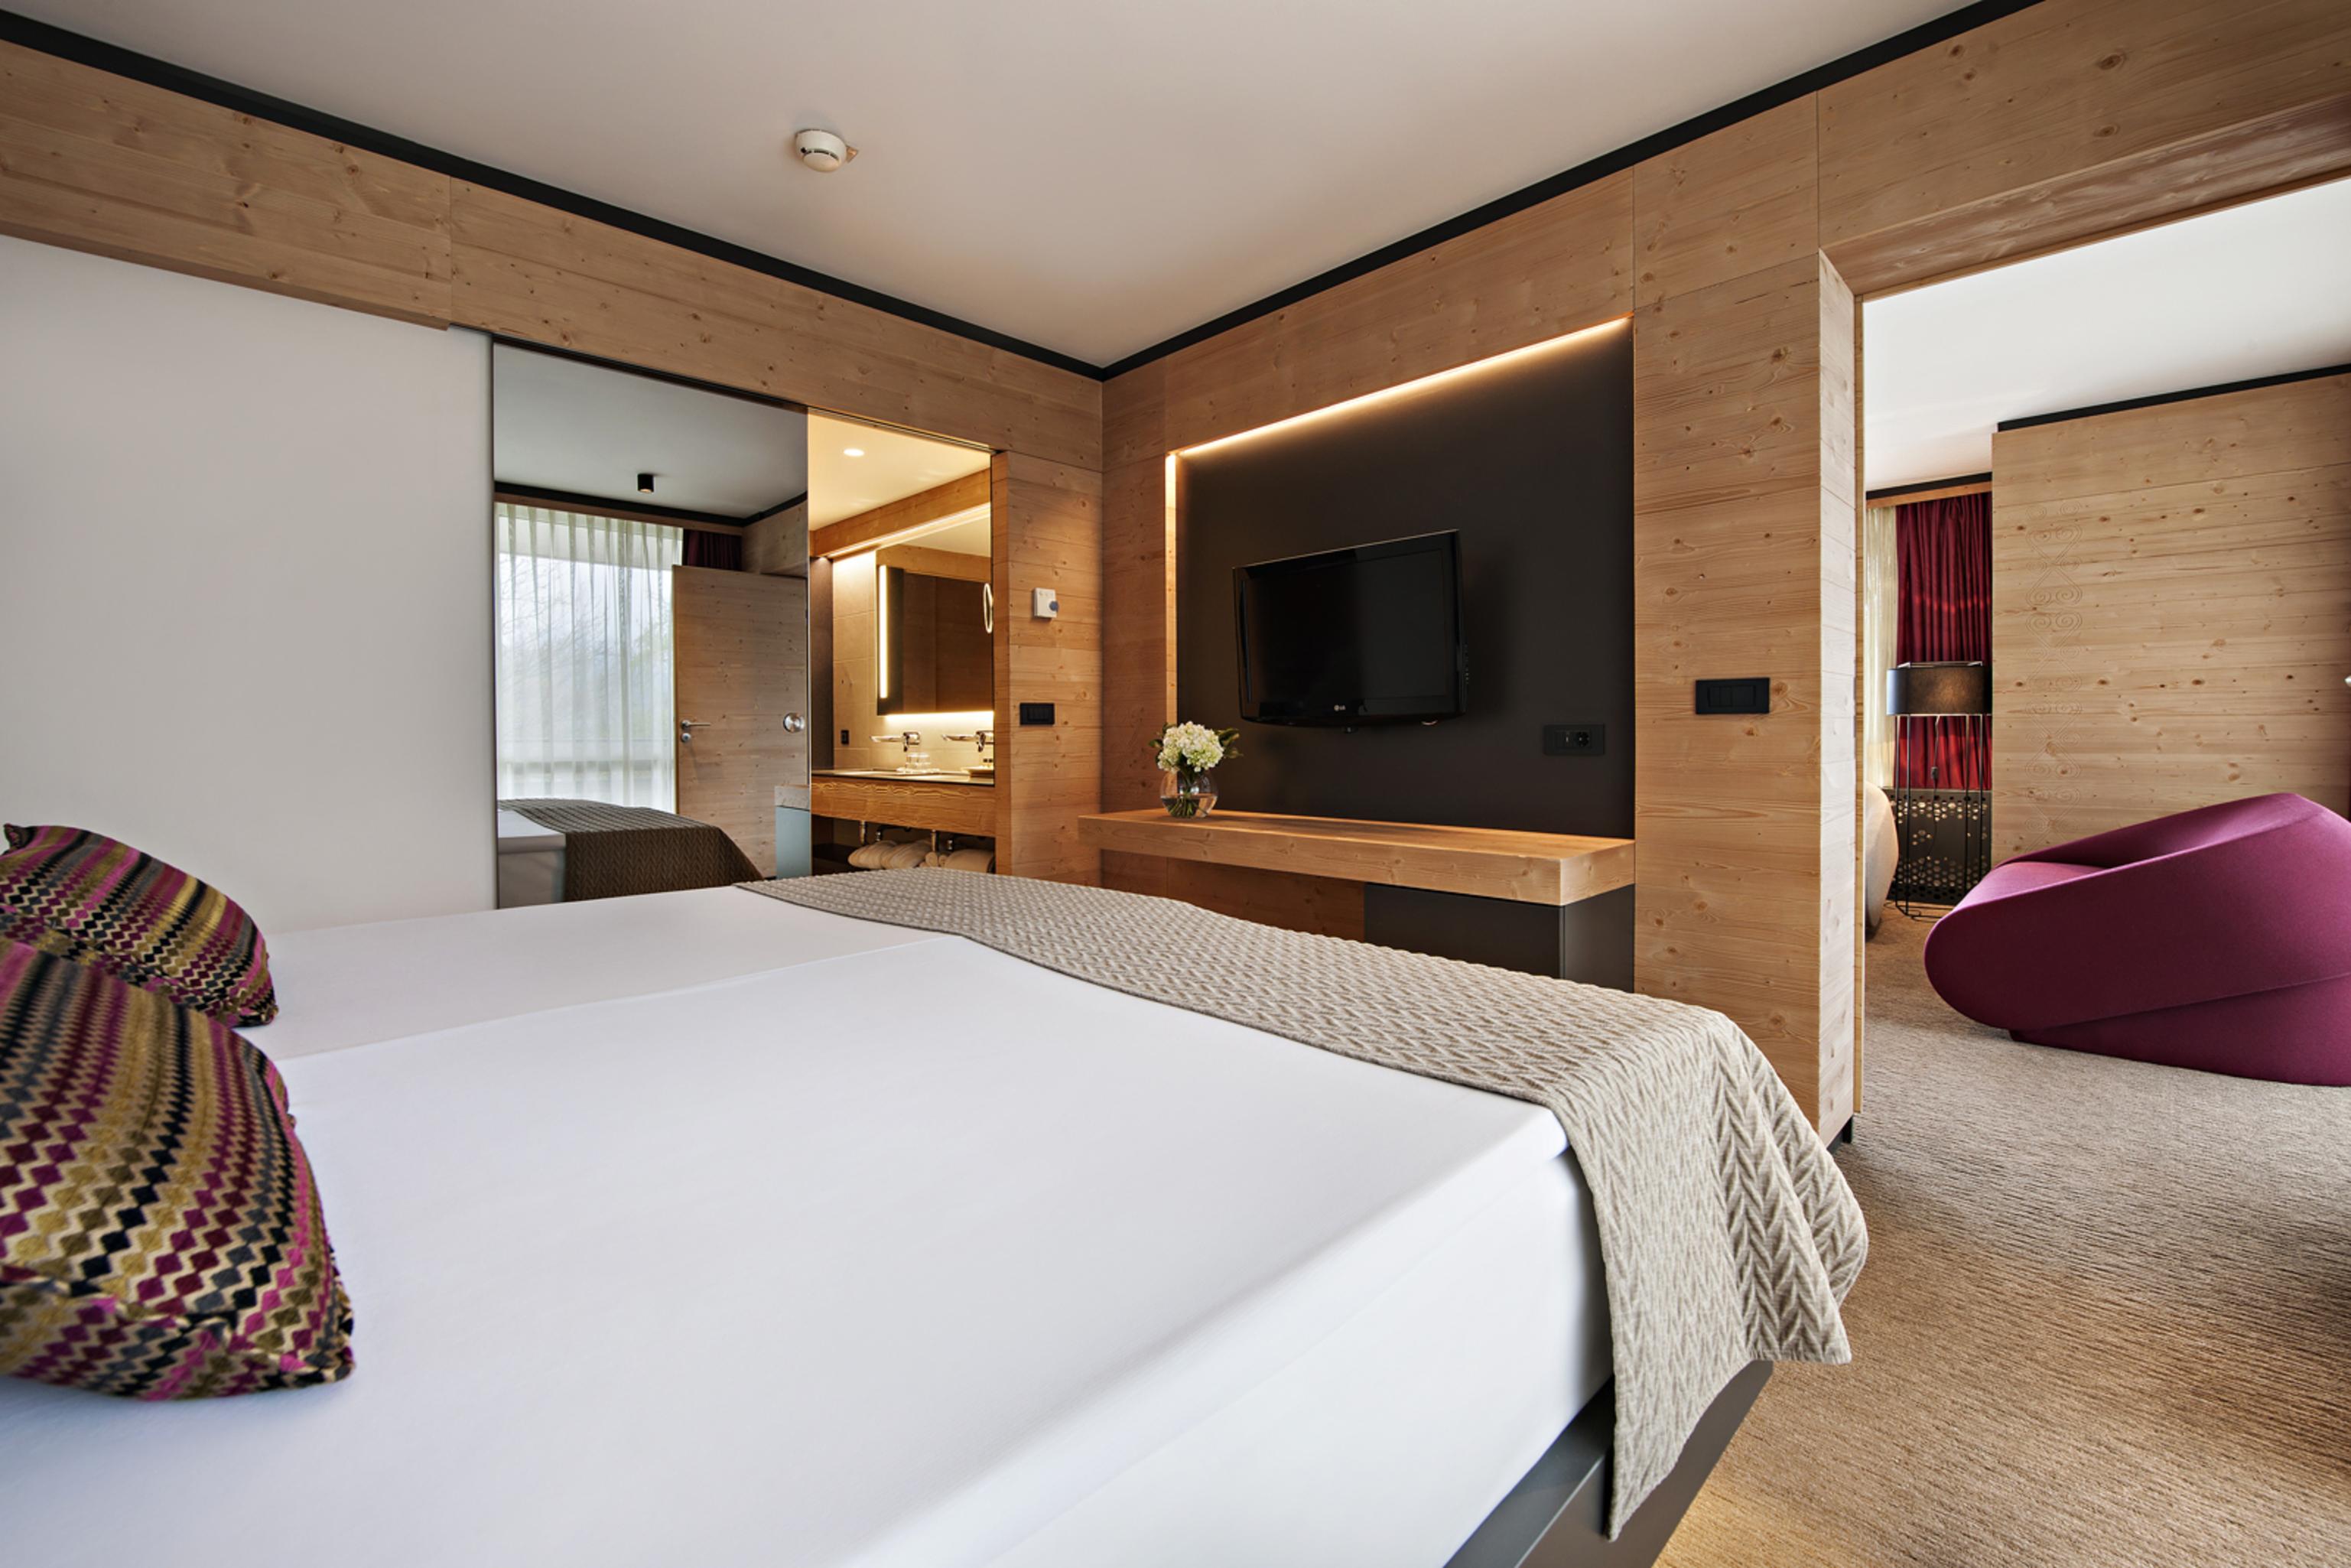 Rikli Balance Hotel - Sava Hotels & Resorts Bled Extérieur photo